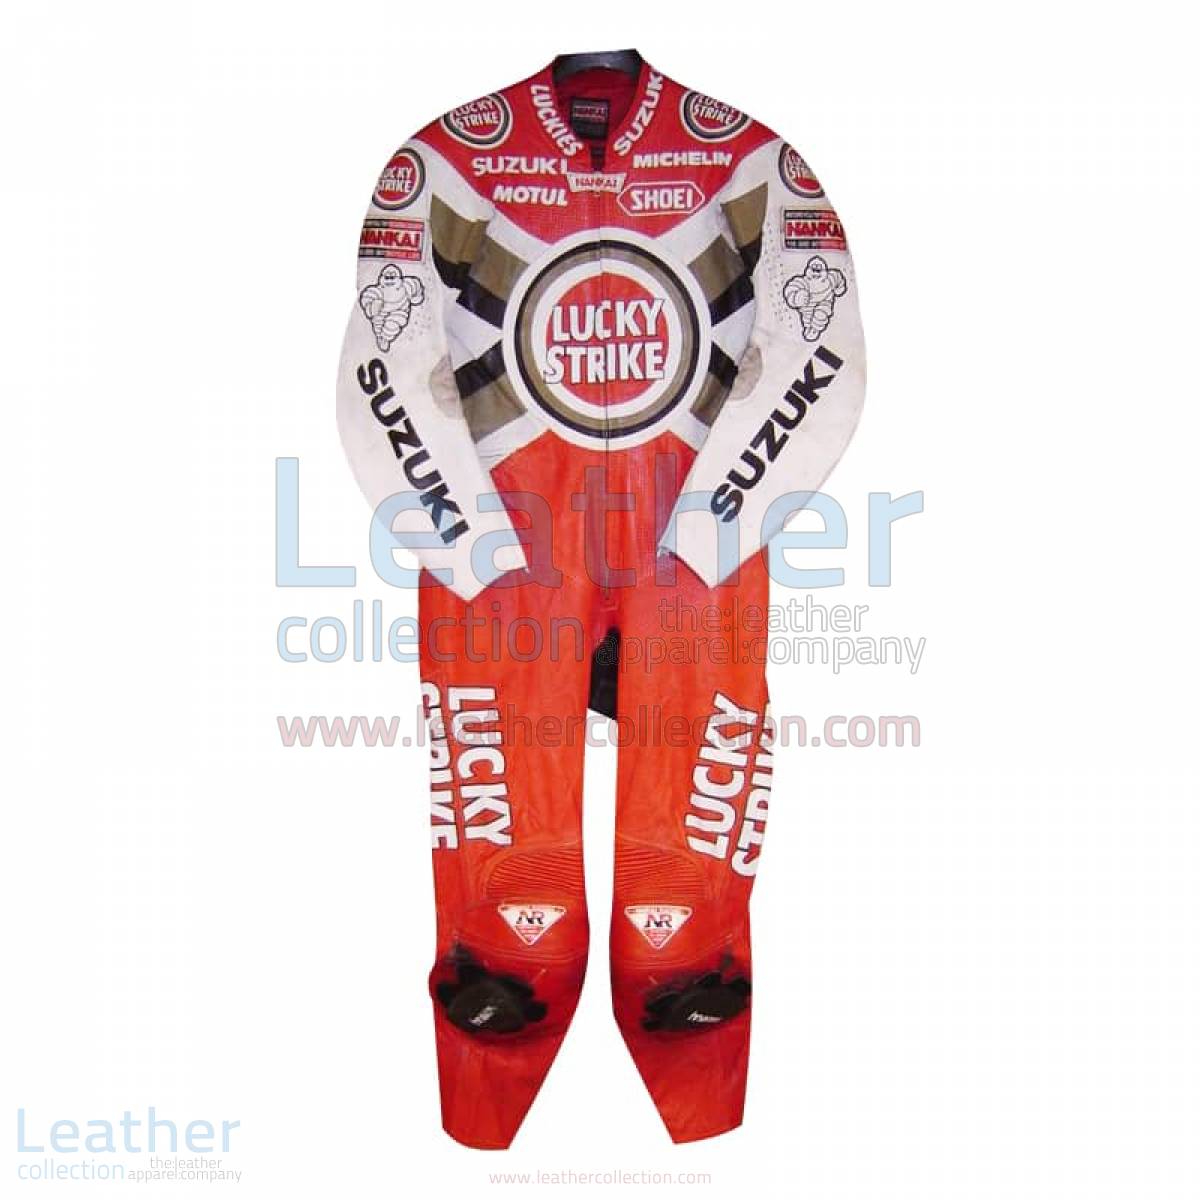 Daryl Beattie Suzuki Lucky Strike Leathers 1995 MotoGP